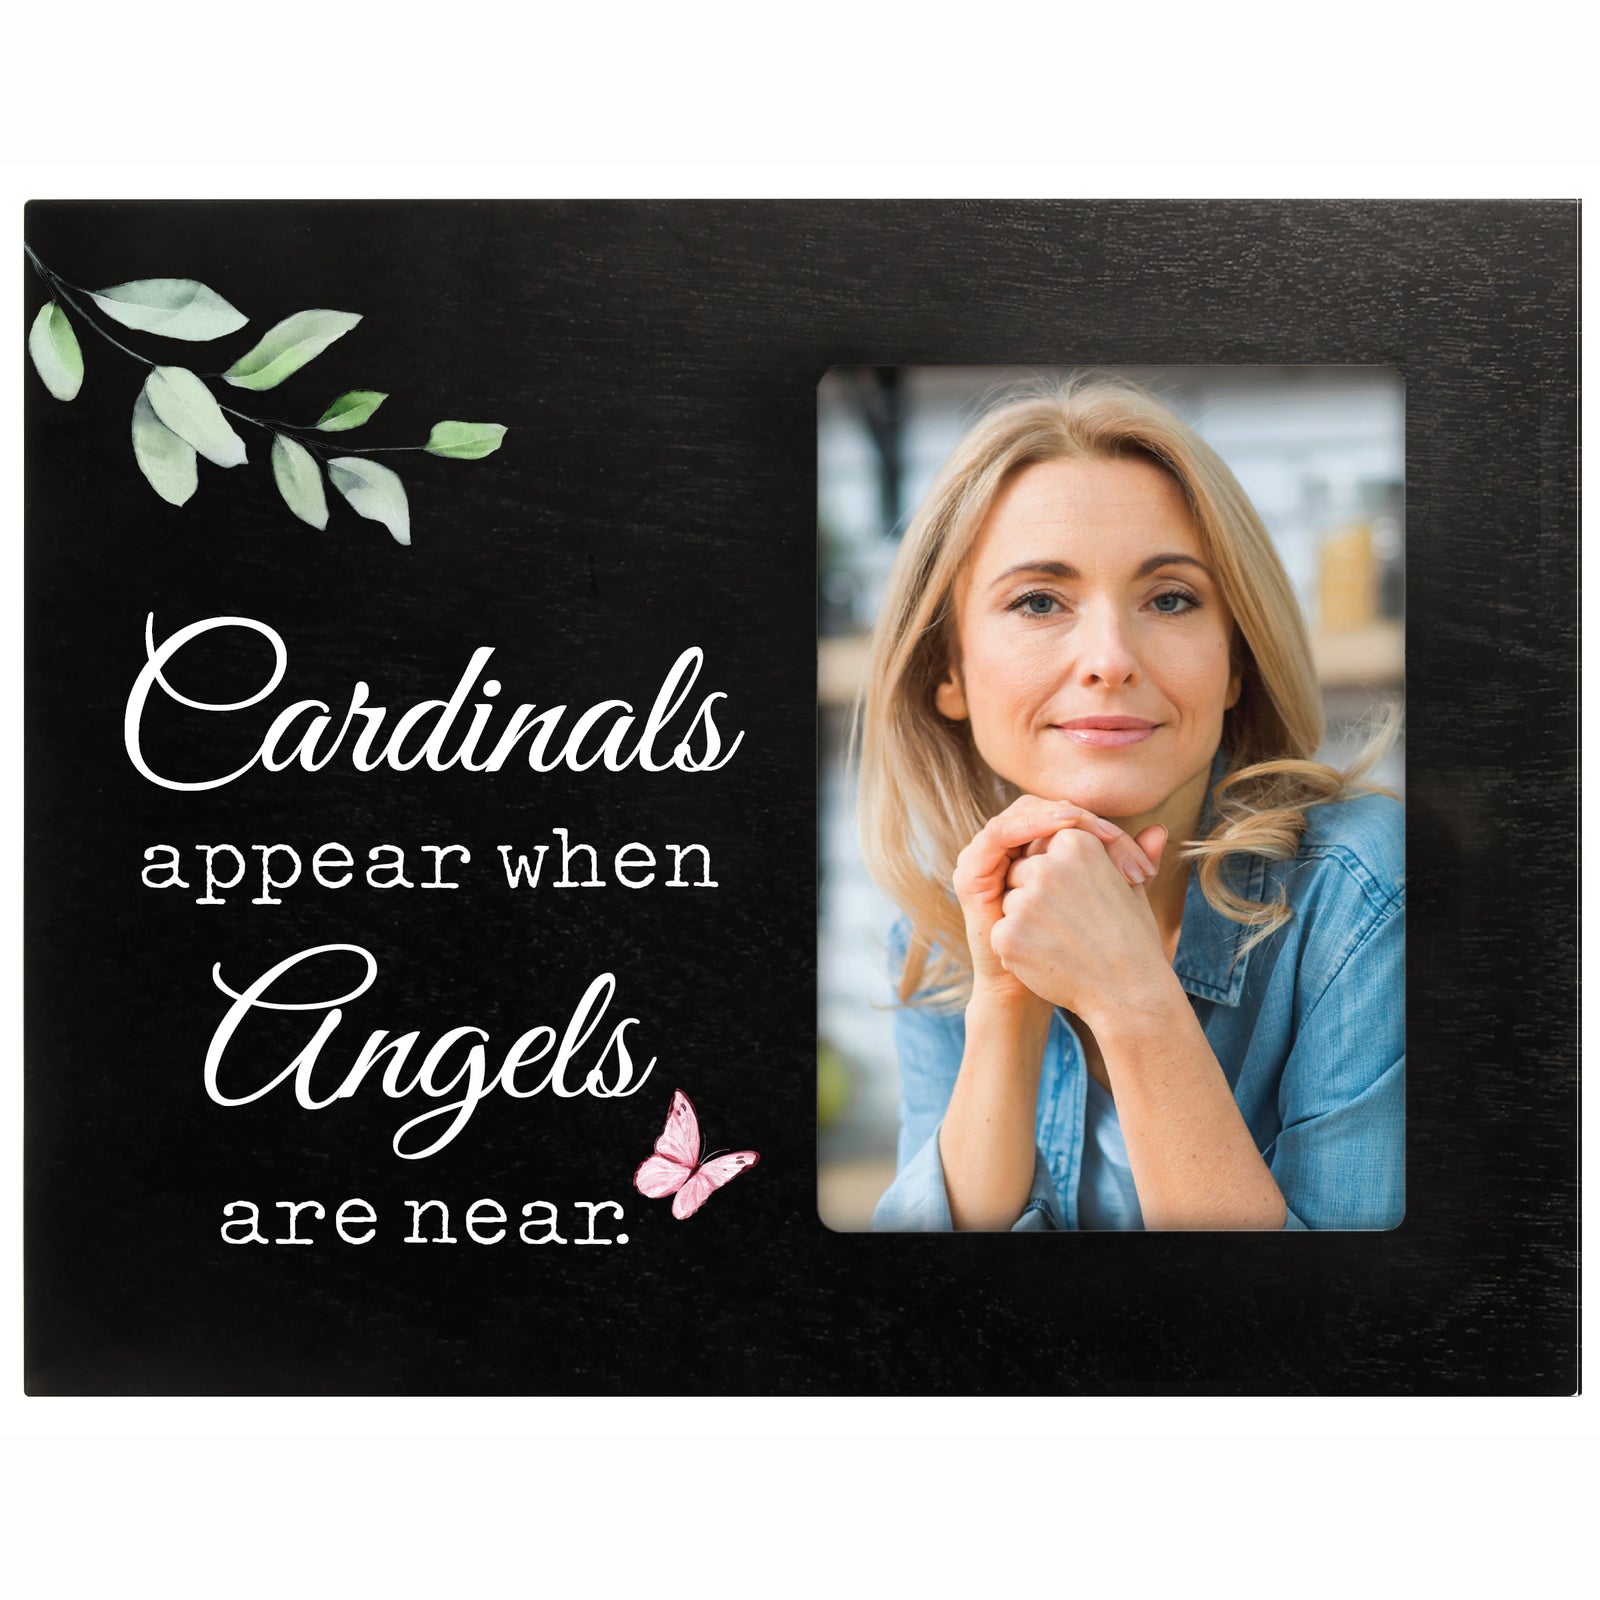 Sentimental Human Memorial Photo Frame Gift Bereavement Gift Idea - Cardinals appear when